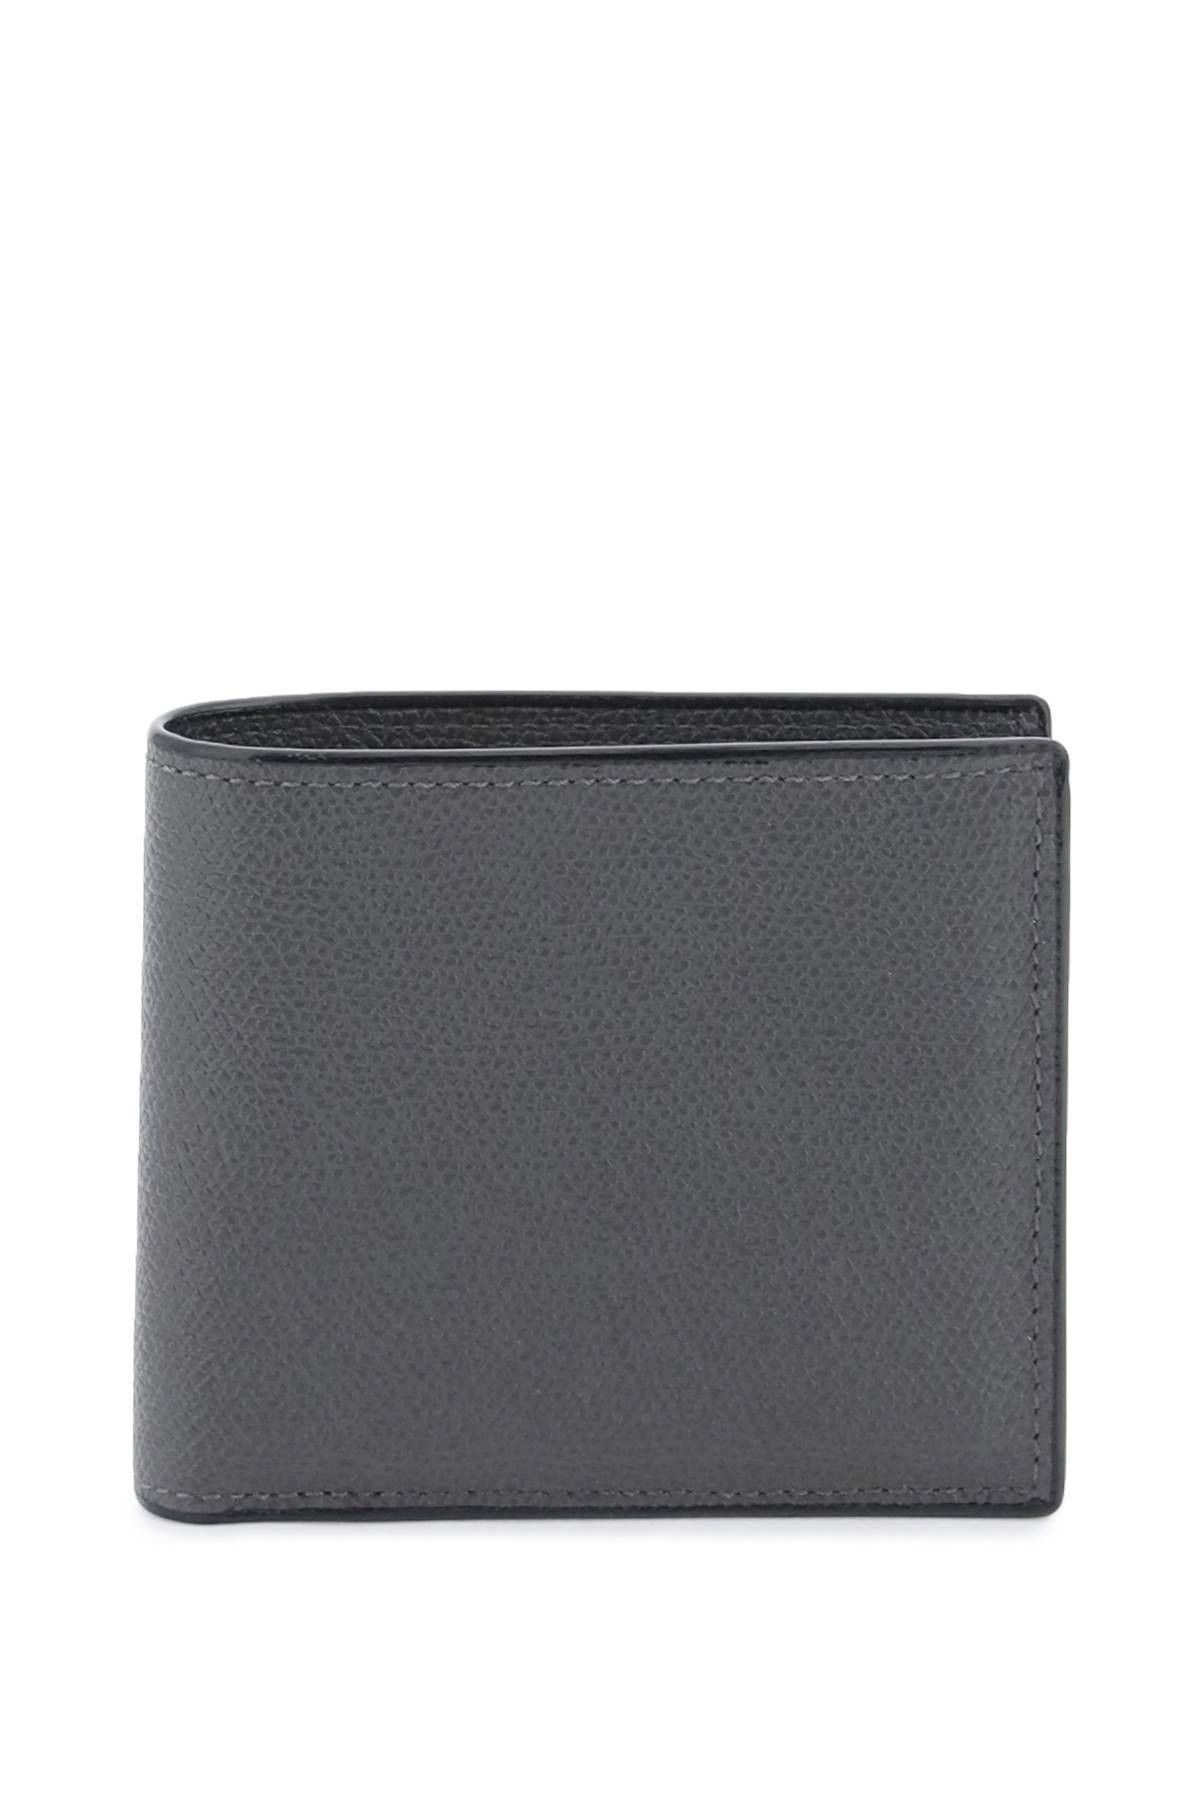 Valextra VALEXTRA leather bifold wallet